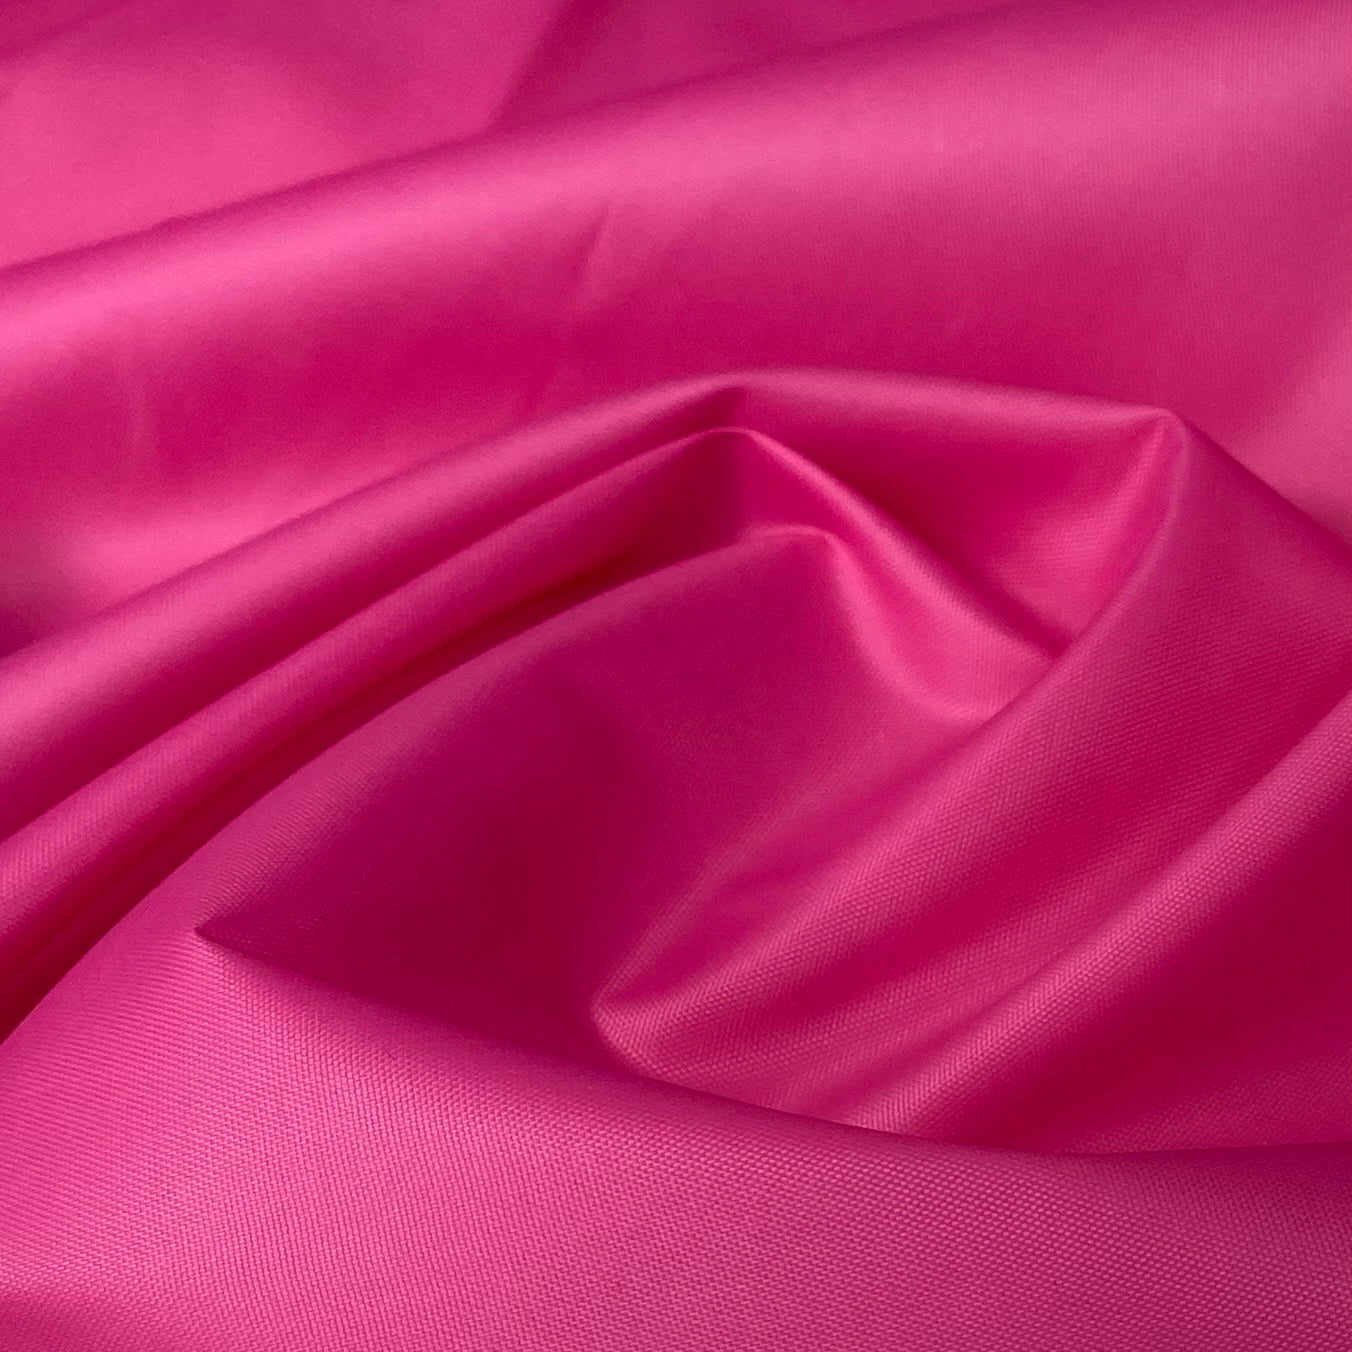 Waterproof Parachute Nylon - Pink